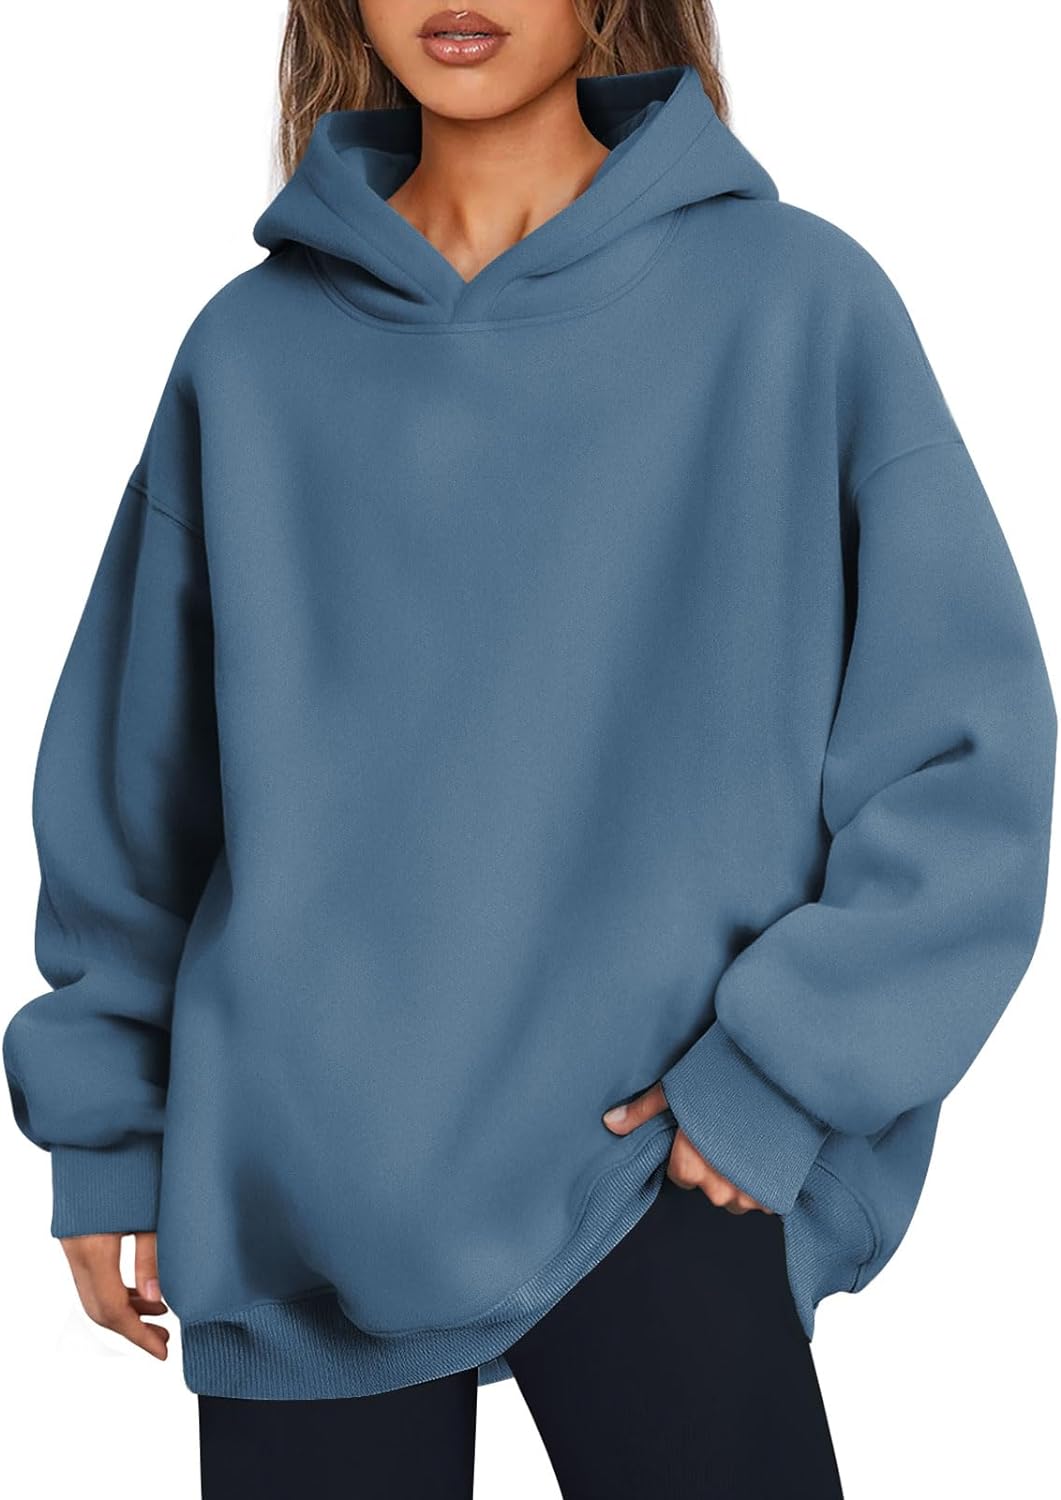 Women's Fleece Hoodies & Sweatshirts